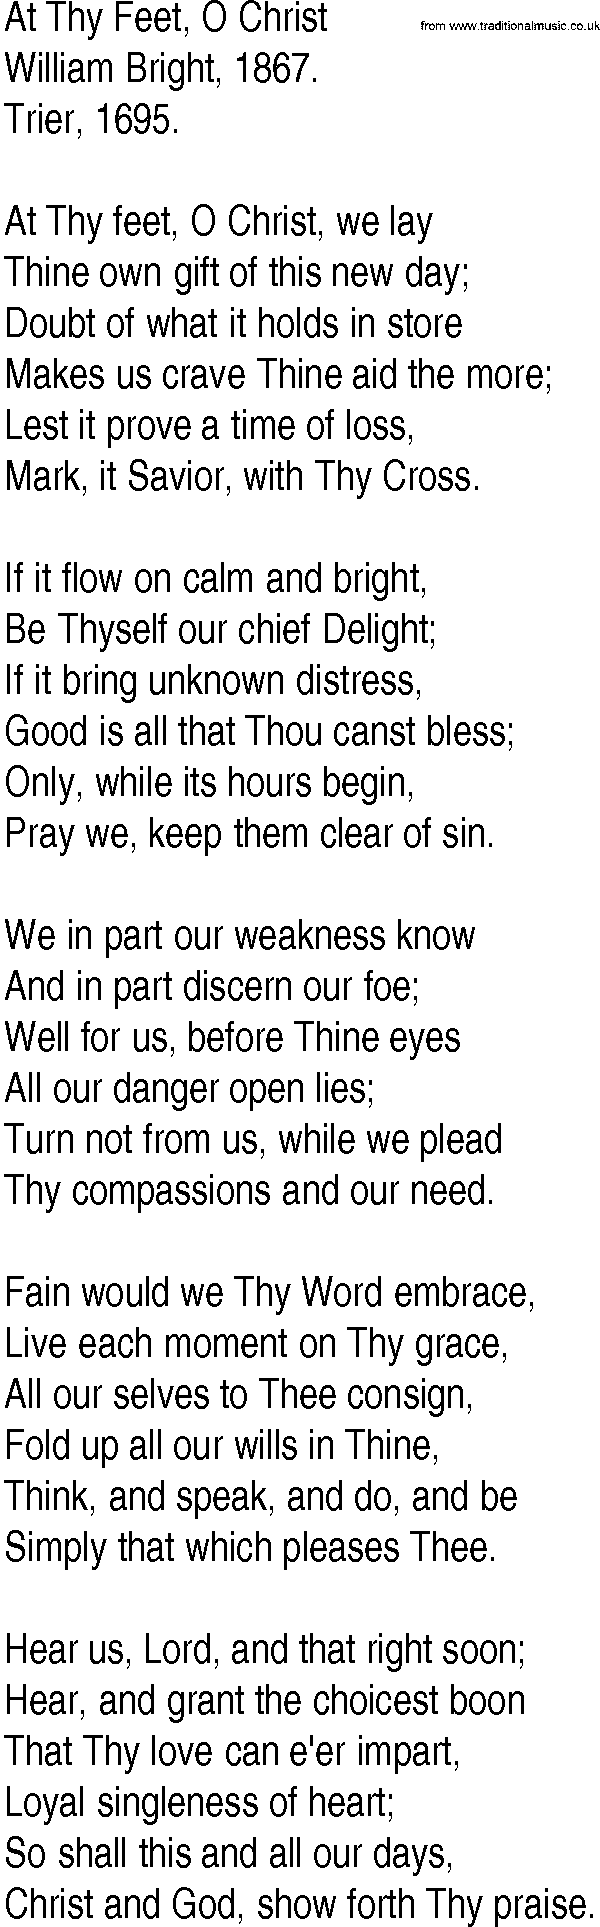 Hymn and Gospel Song: At Thy Feet, O Christ by William Bright lyrics